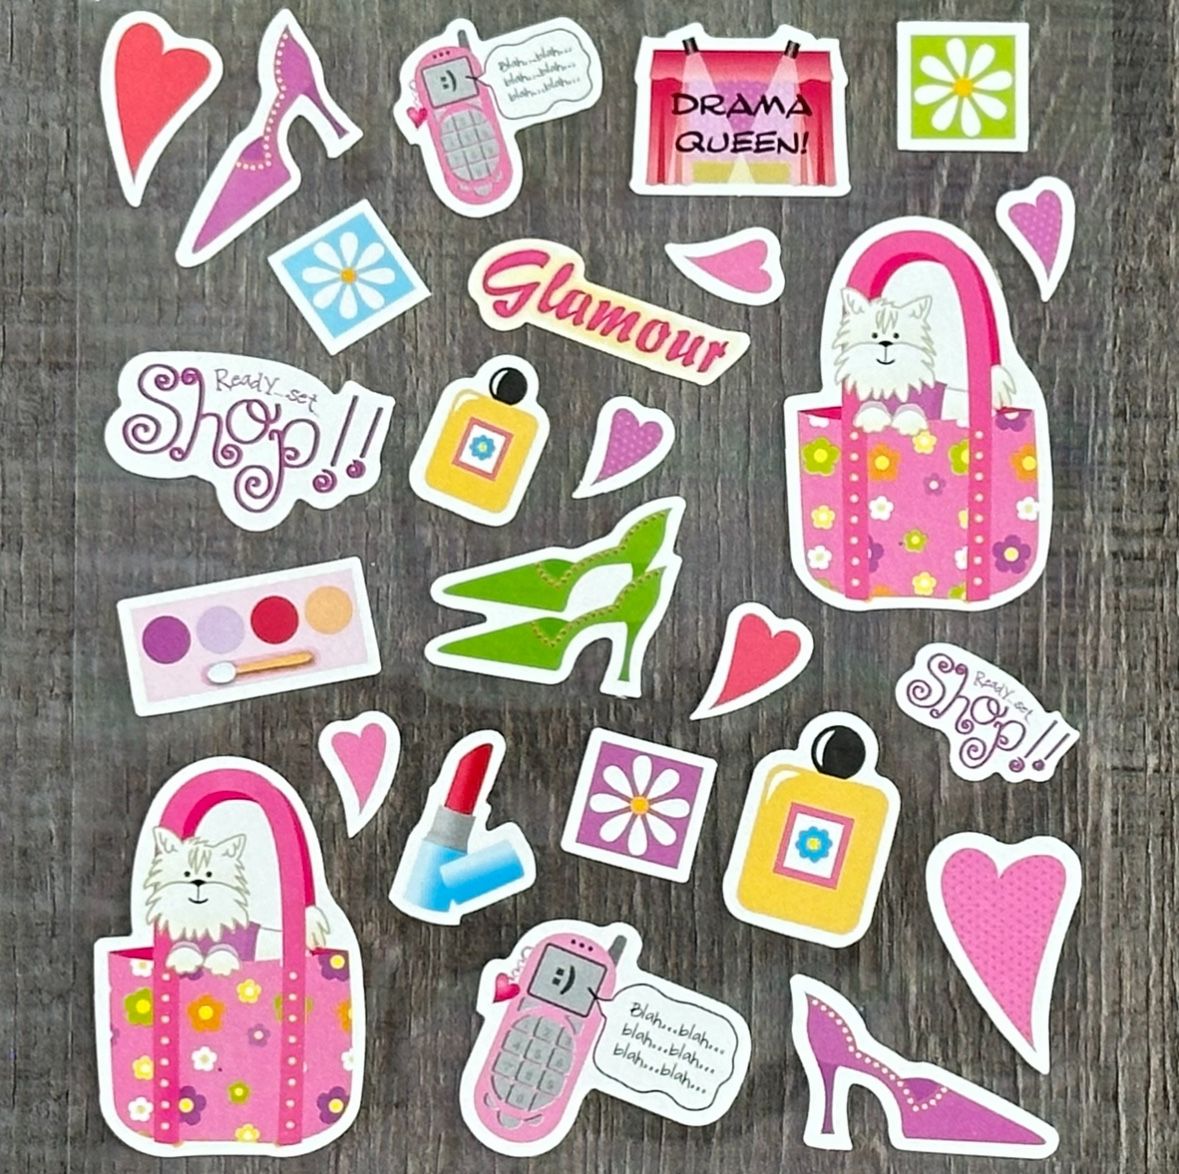 New “Drama Queen” Shopping Scrapbook Stickers